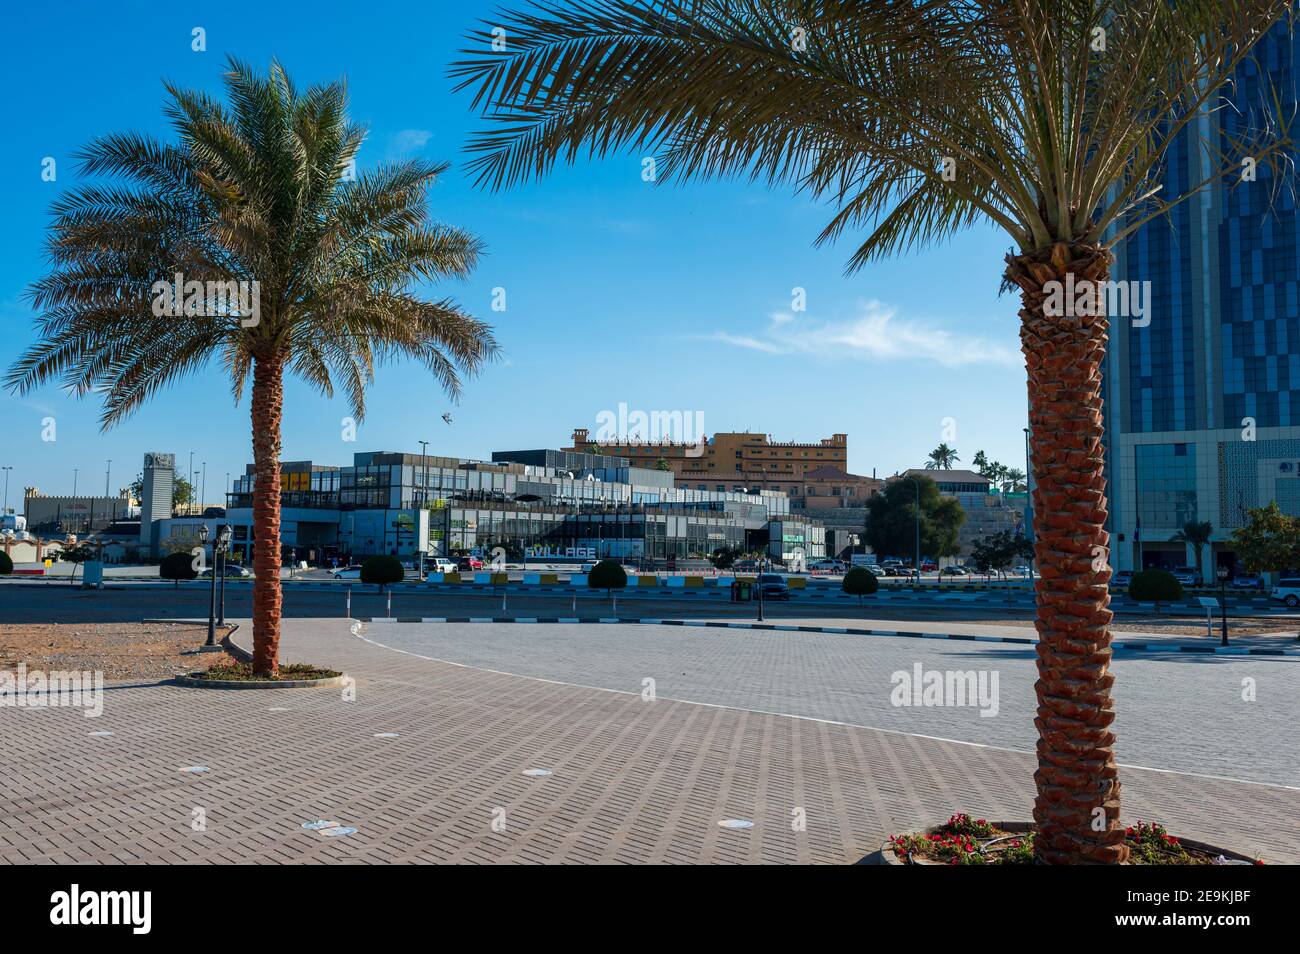 Ras al Khaimah, United Arab Emirates - February 3, 2020: Groove village shopping and leisure area in Ras al Khaimah emirate of United Arab Emirates Stock Photo